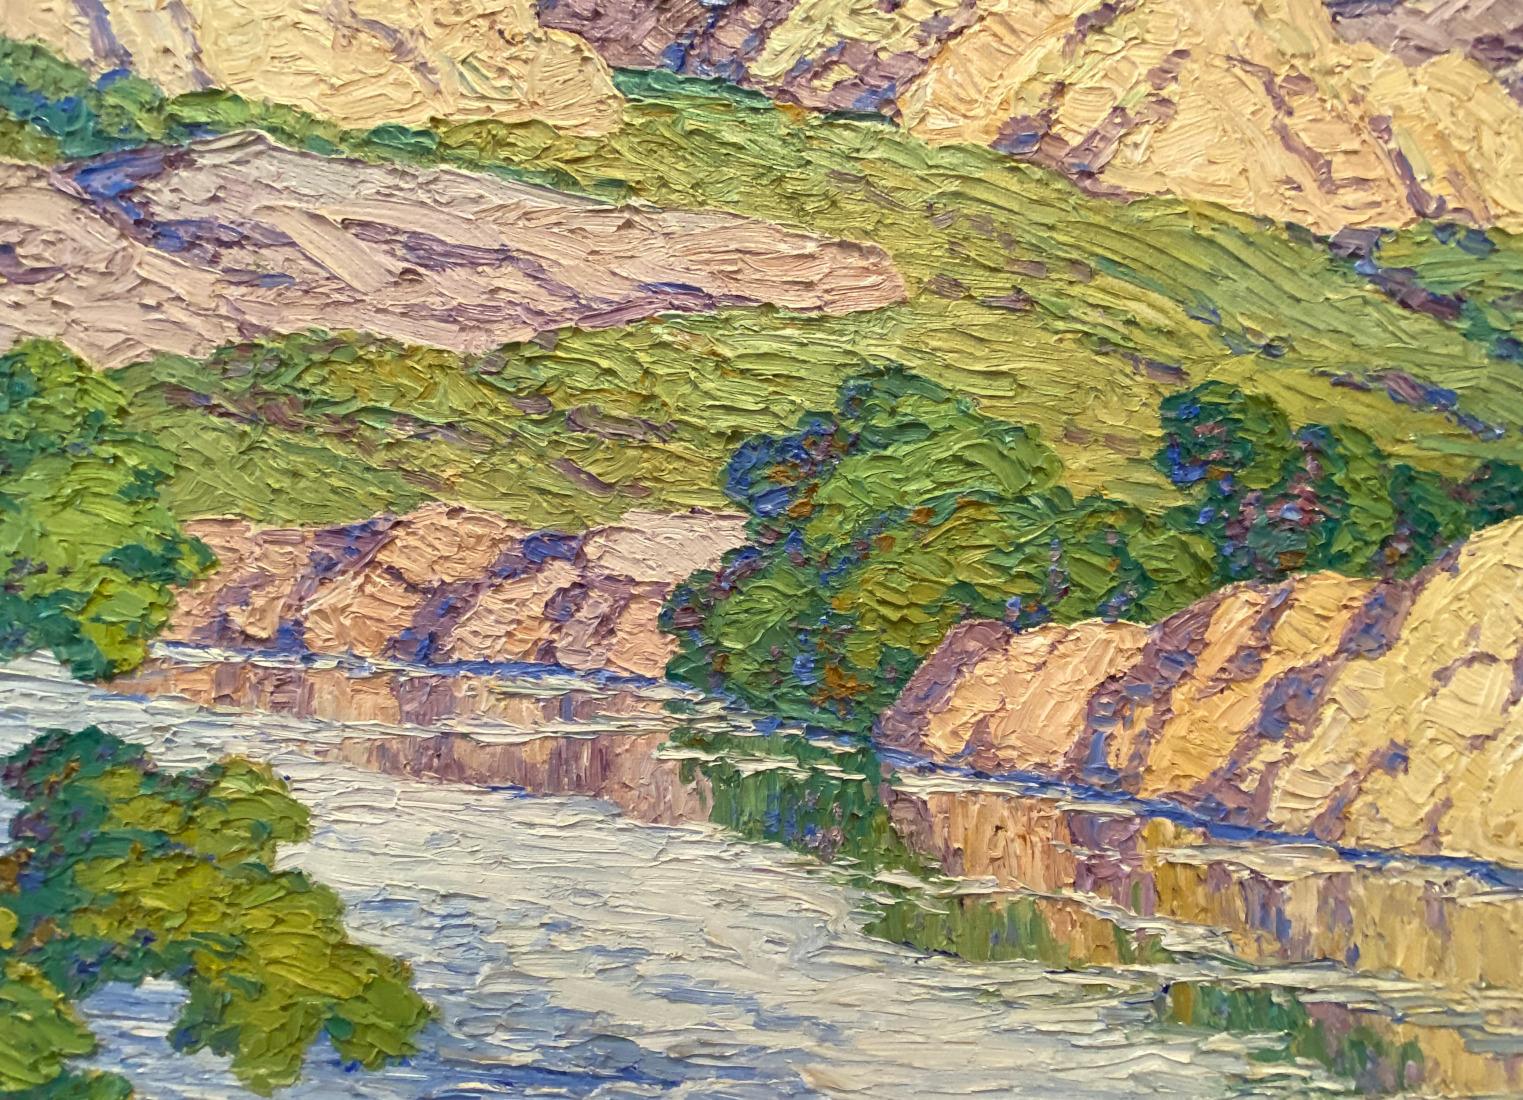 Birger Sandzen 
(1871-1954)
Kansas / Colorado Artist
Image Size: 40.5 x 48
Frame Size: 49.5 x 57
Medium: Oil
Untitled 